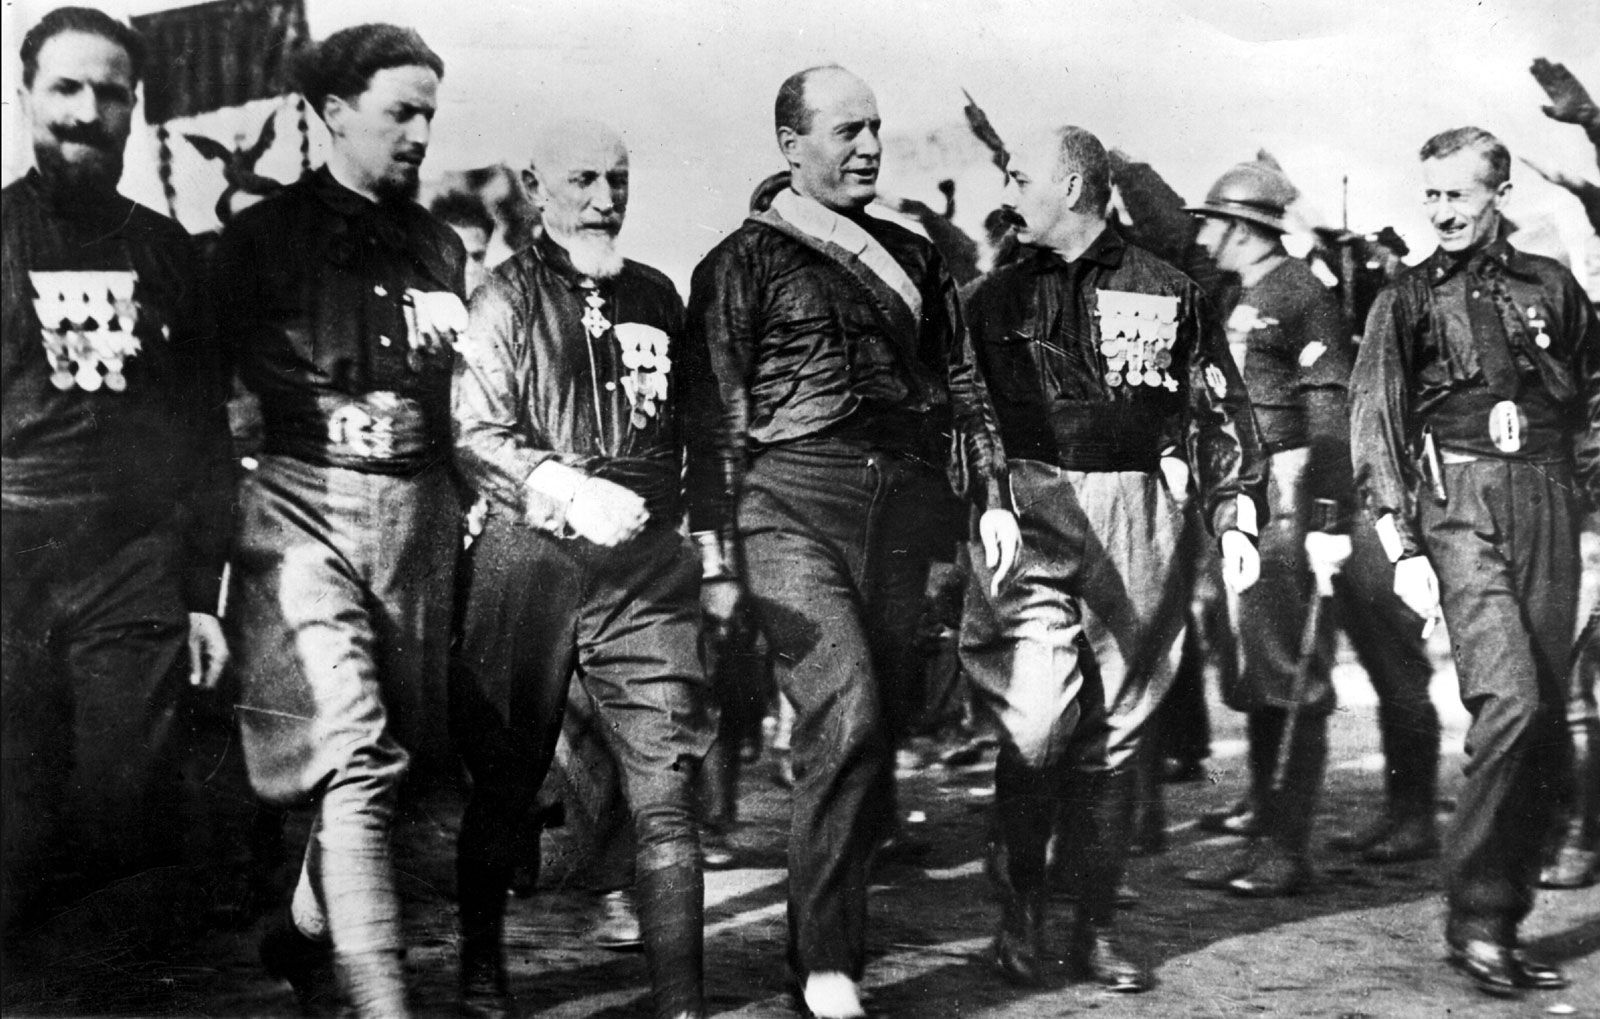 Balbo-De-Bono-Mussolini-Blackshirts-March-on-Rome-October-1922.jpg